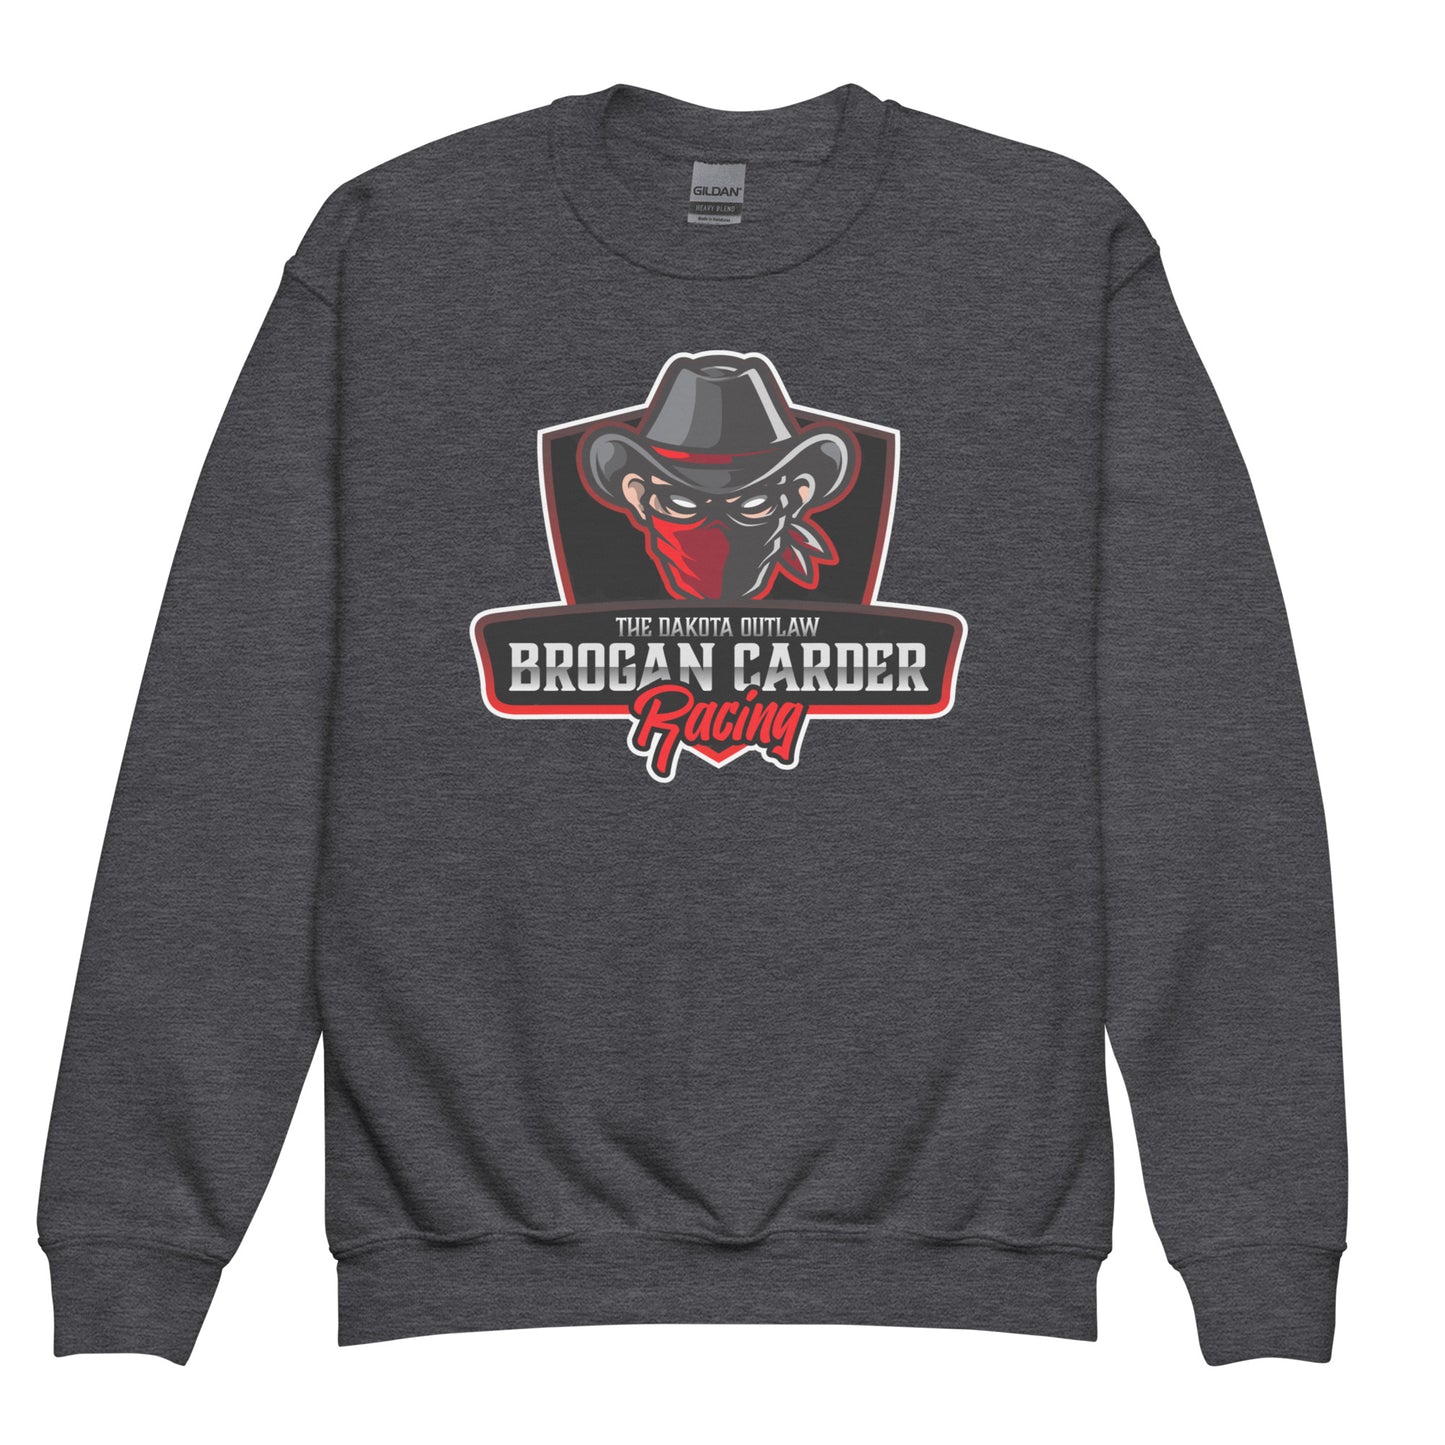 Brogan Carder Racing Kids Crewneck Sweatshirt